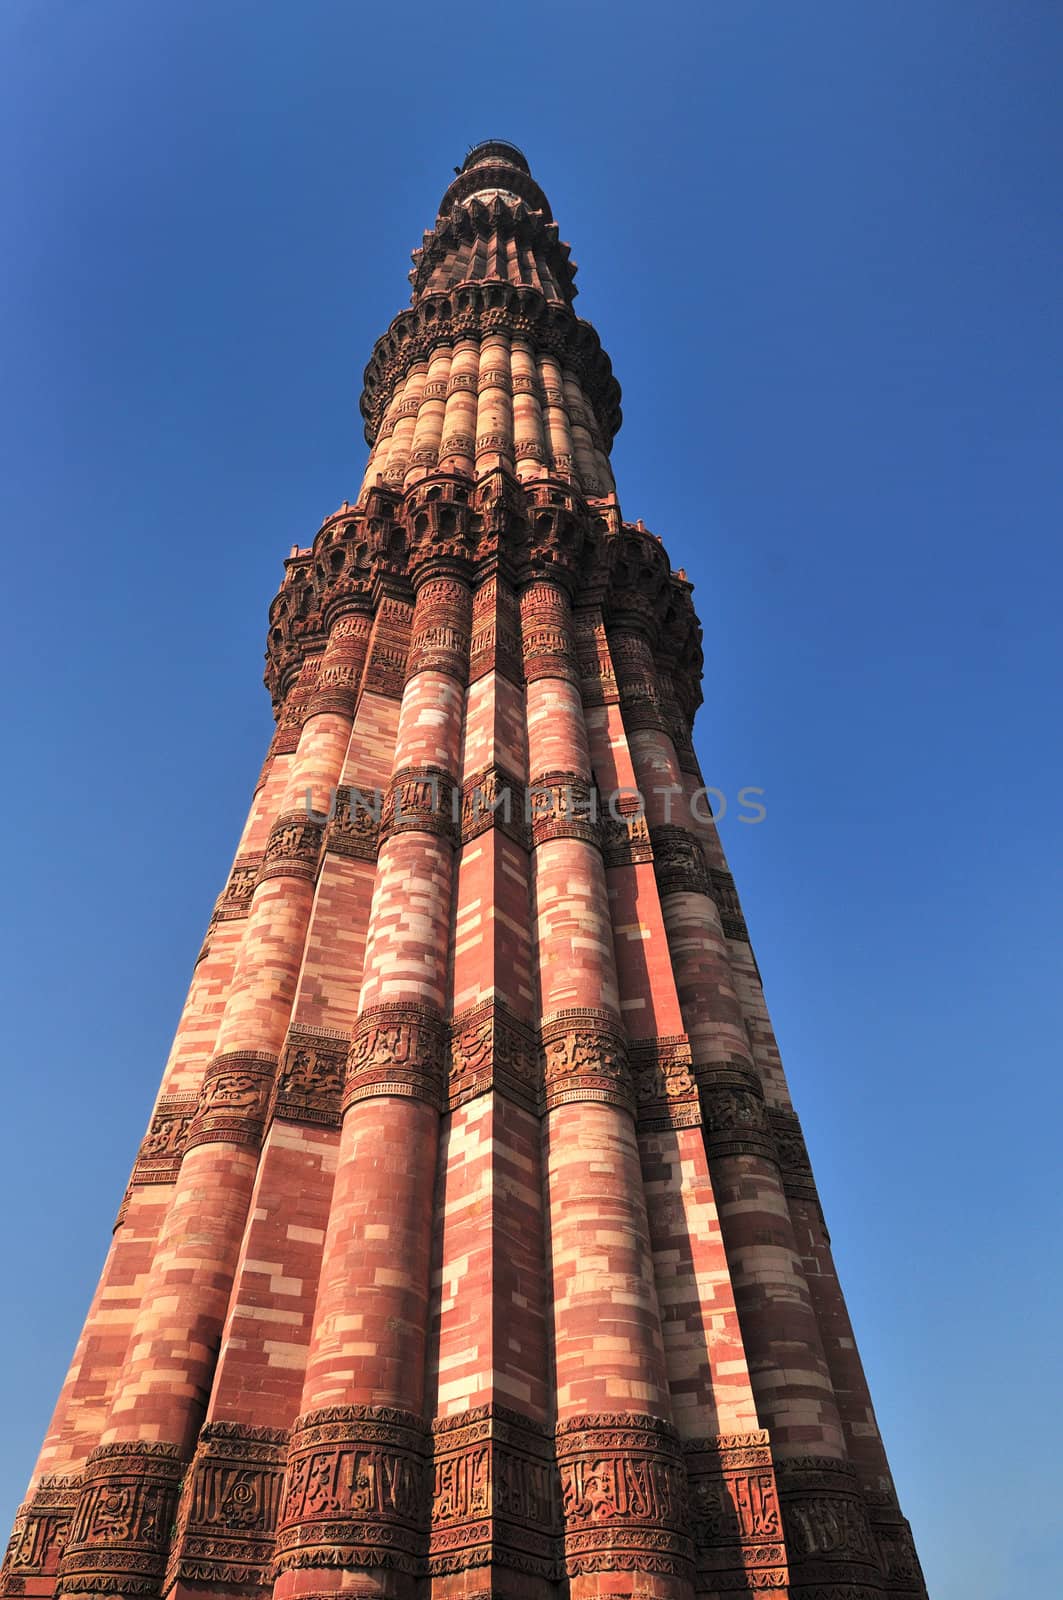 The tower Qutub Minar is the tallest brick minaret in the world. Delhi, India